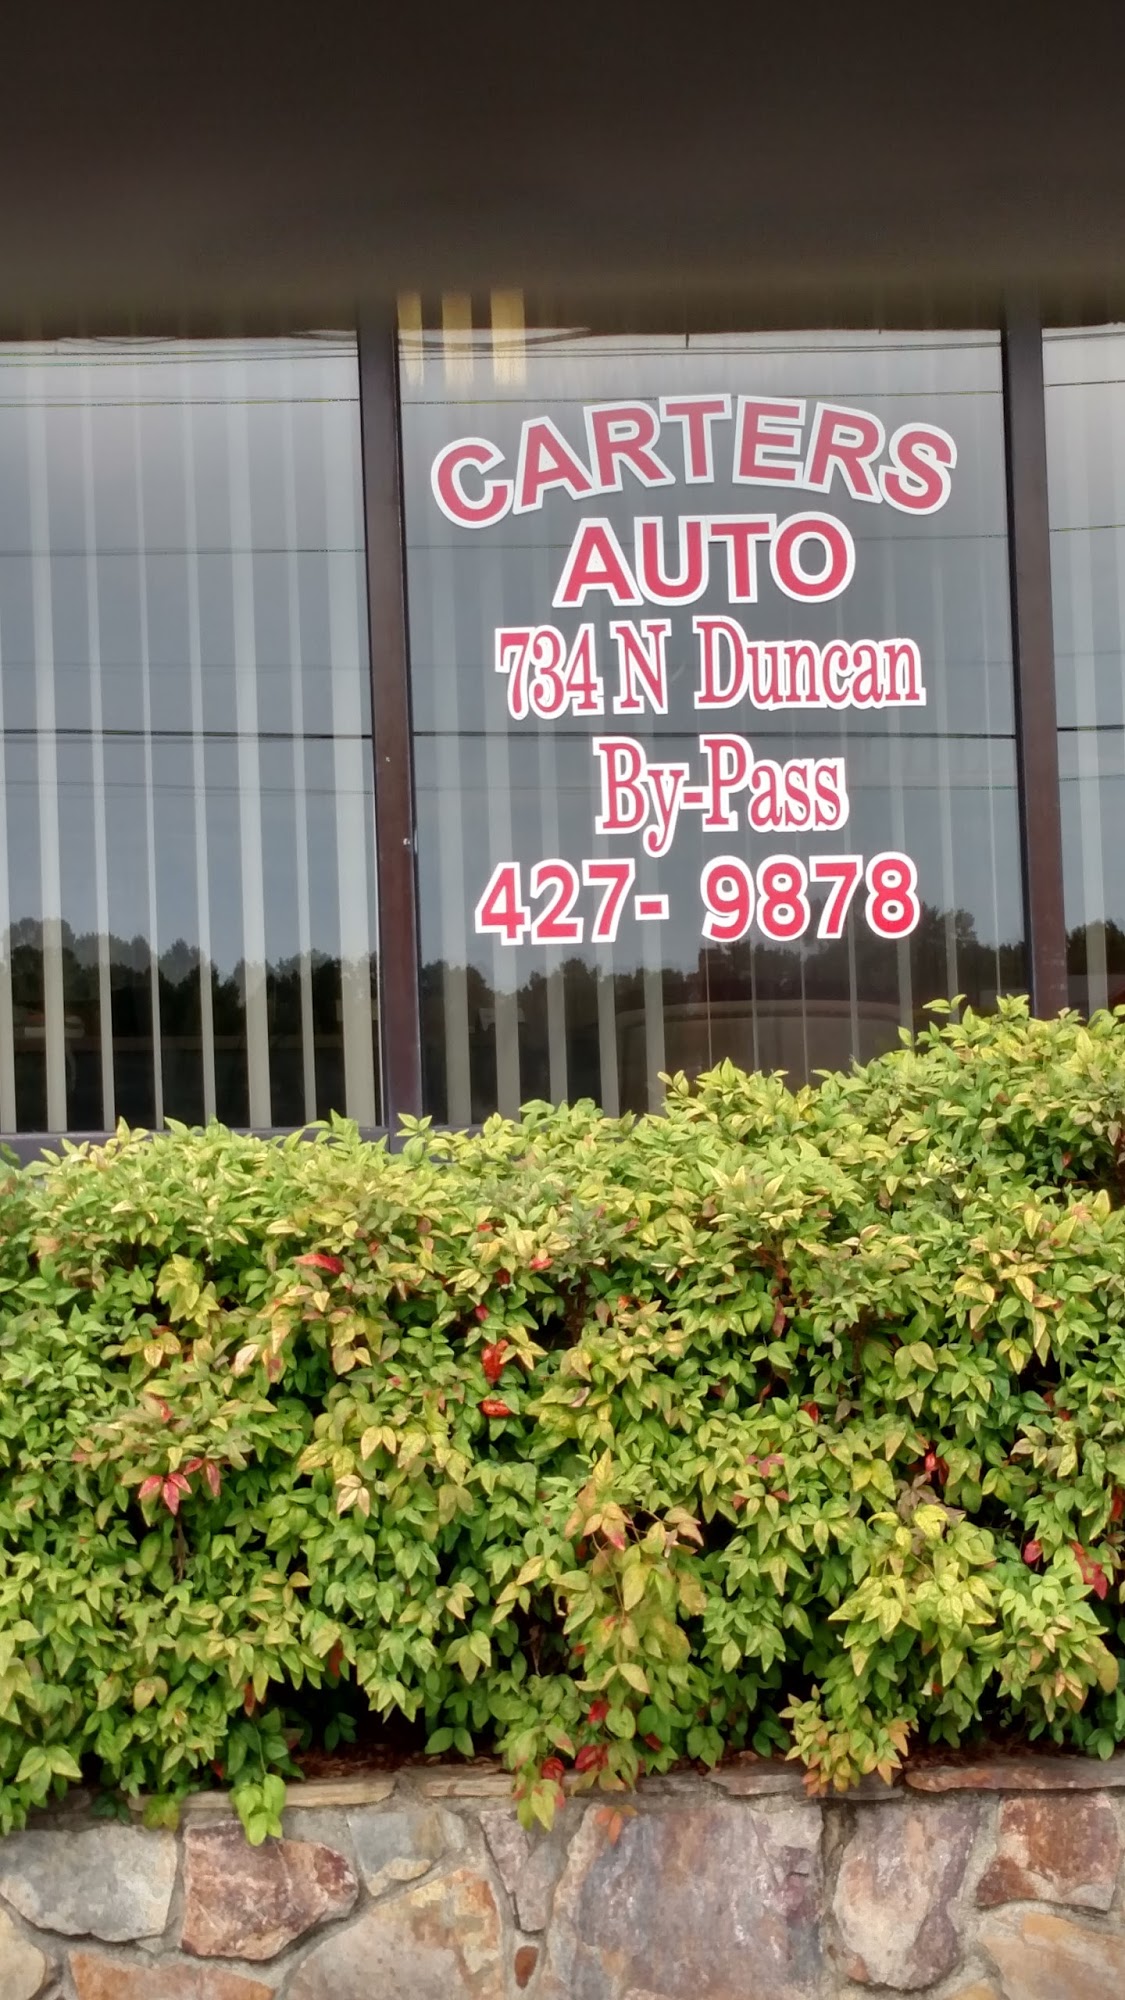 Carter's Auto Sales